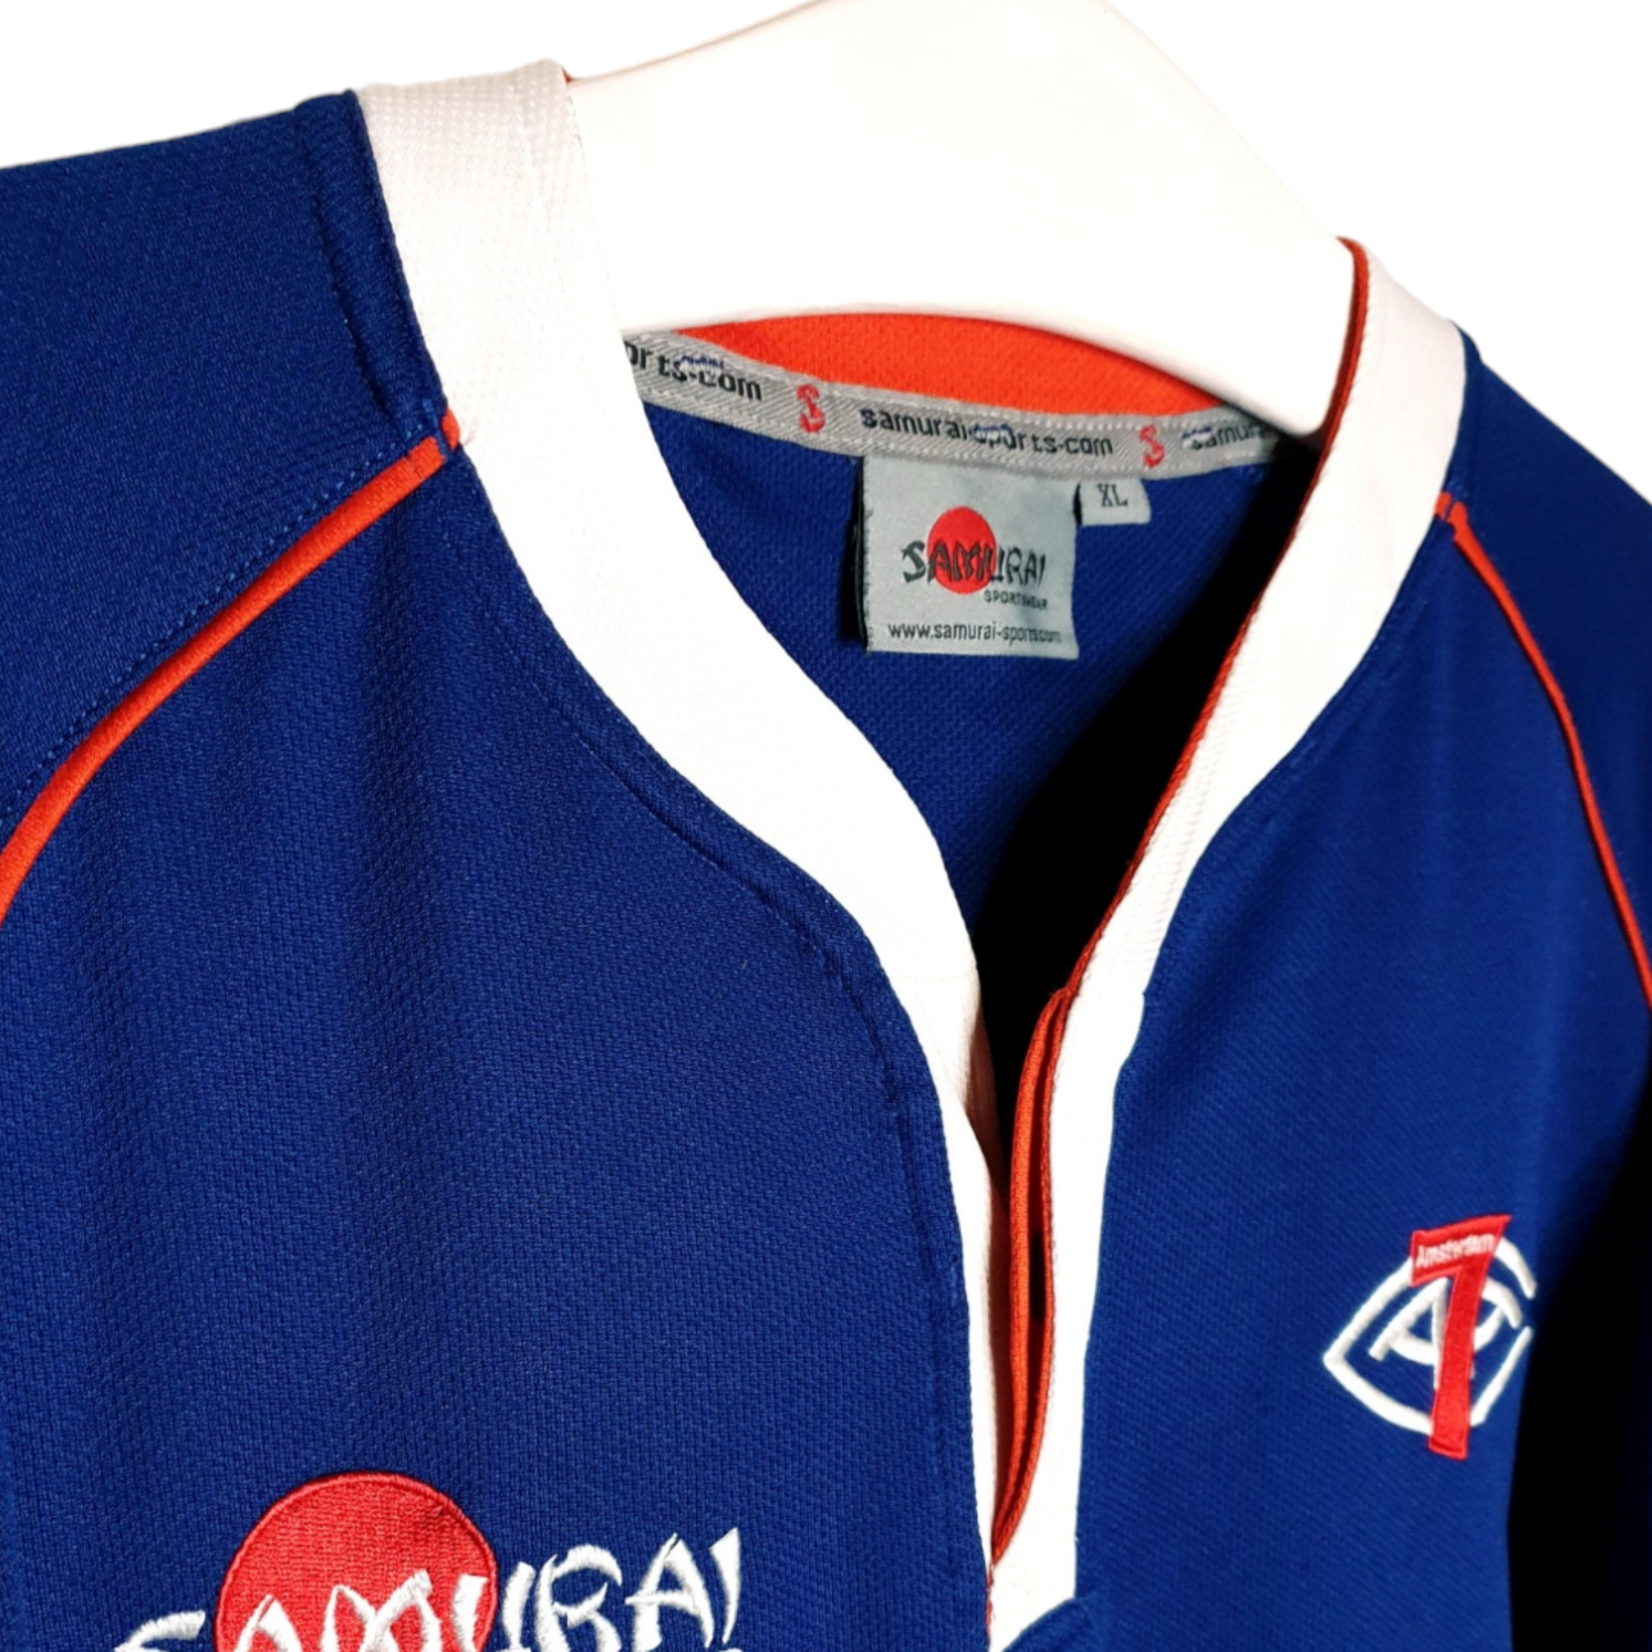 Samurai Origineel Samurai vintage rugby shirt Amsterdam 7s